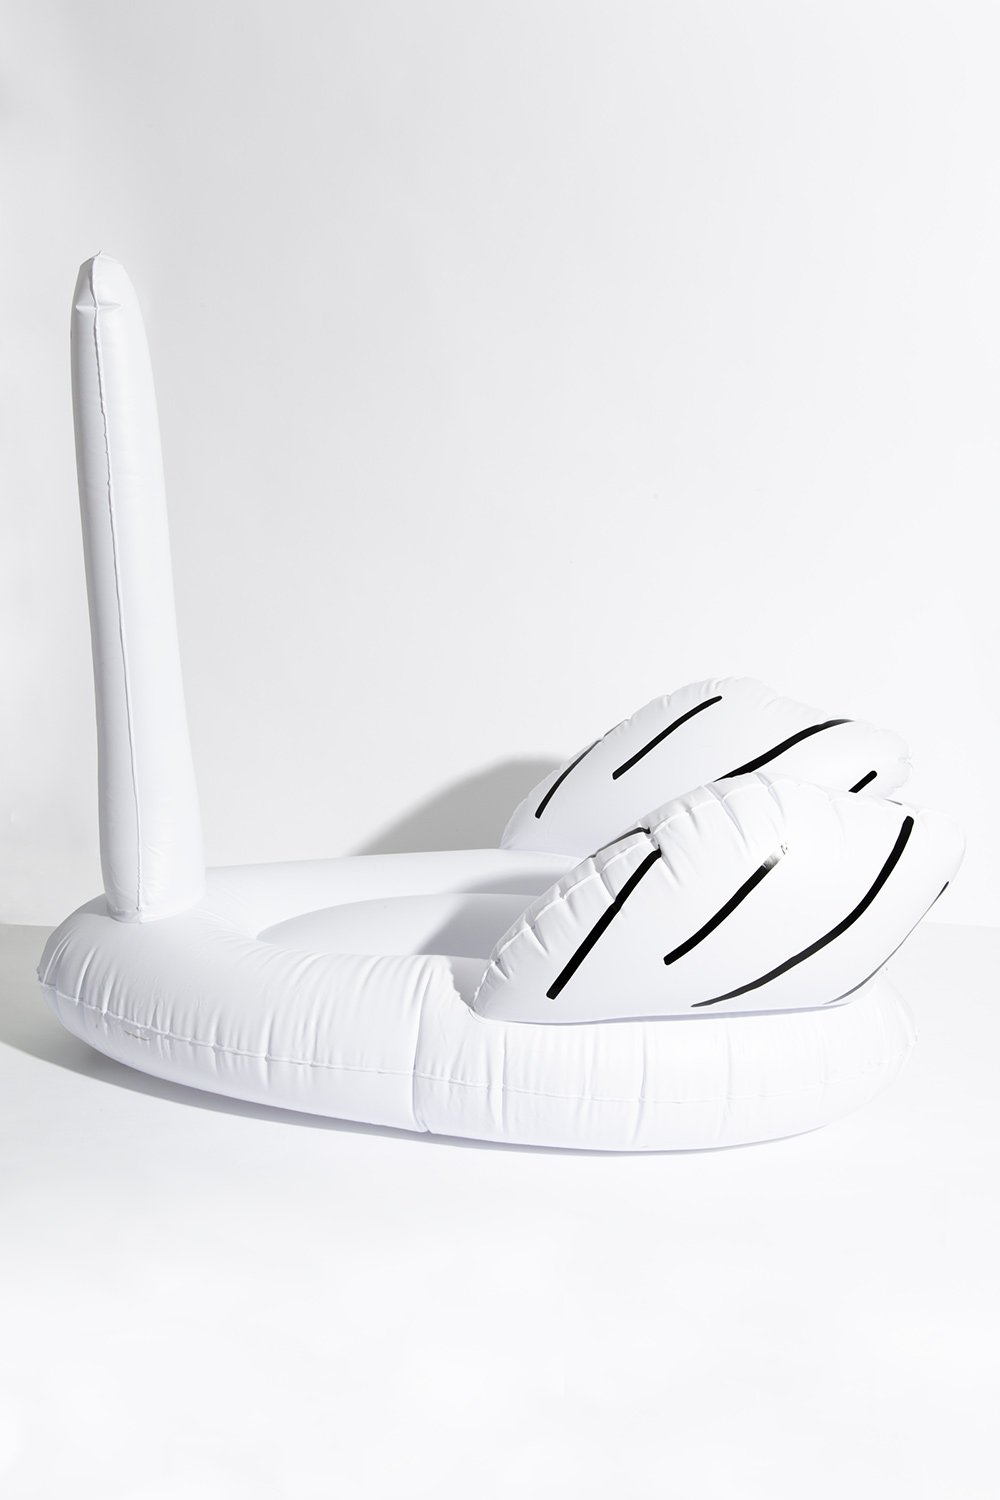 Ridiculous Inflatable Swan-Thing x David Shrigley Plastic Third Drawer Down Studio 